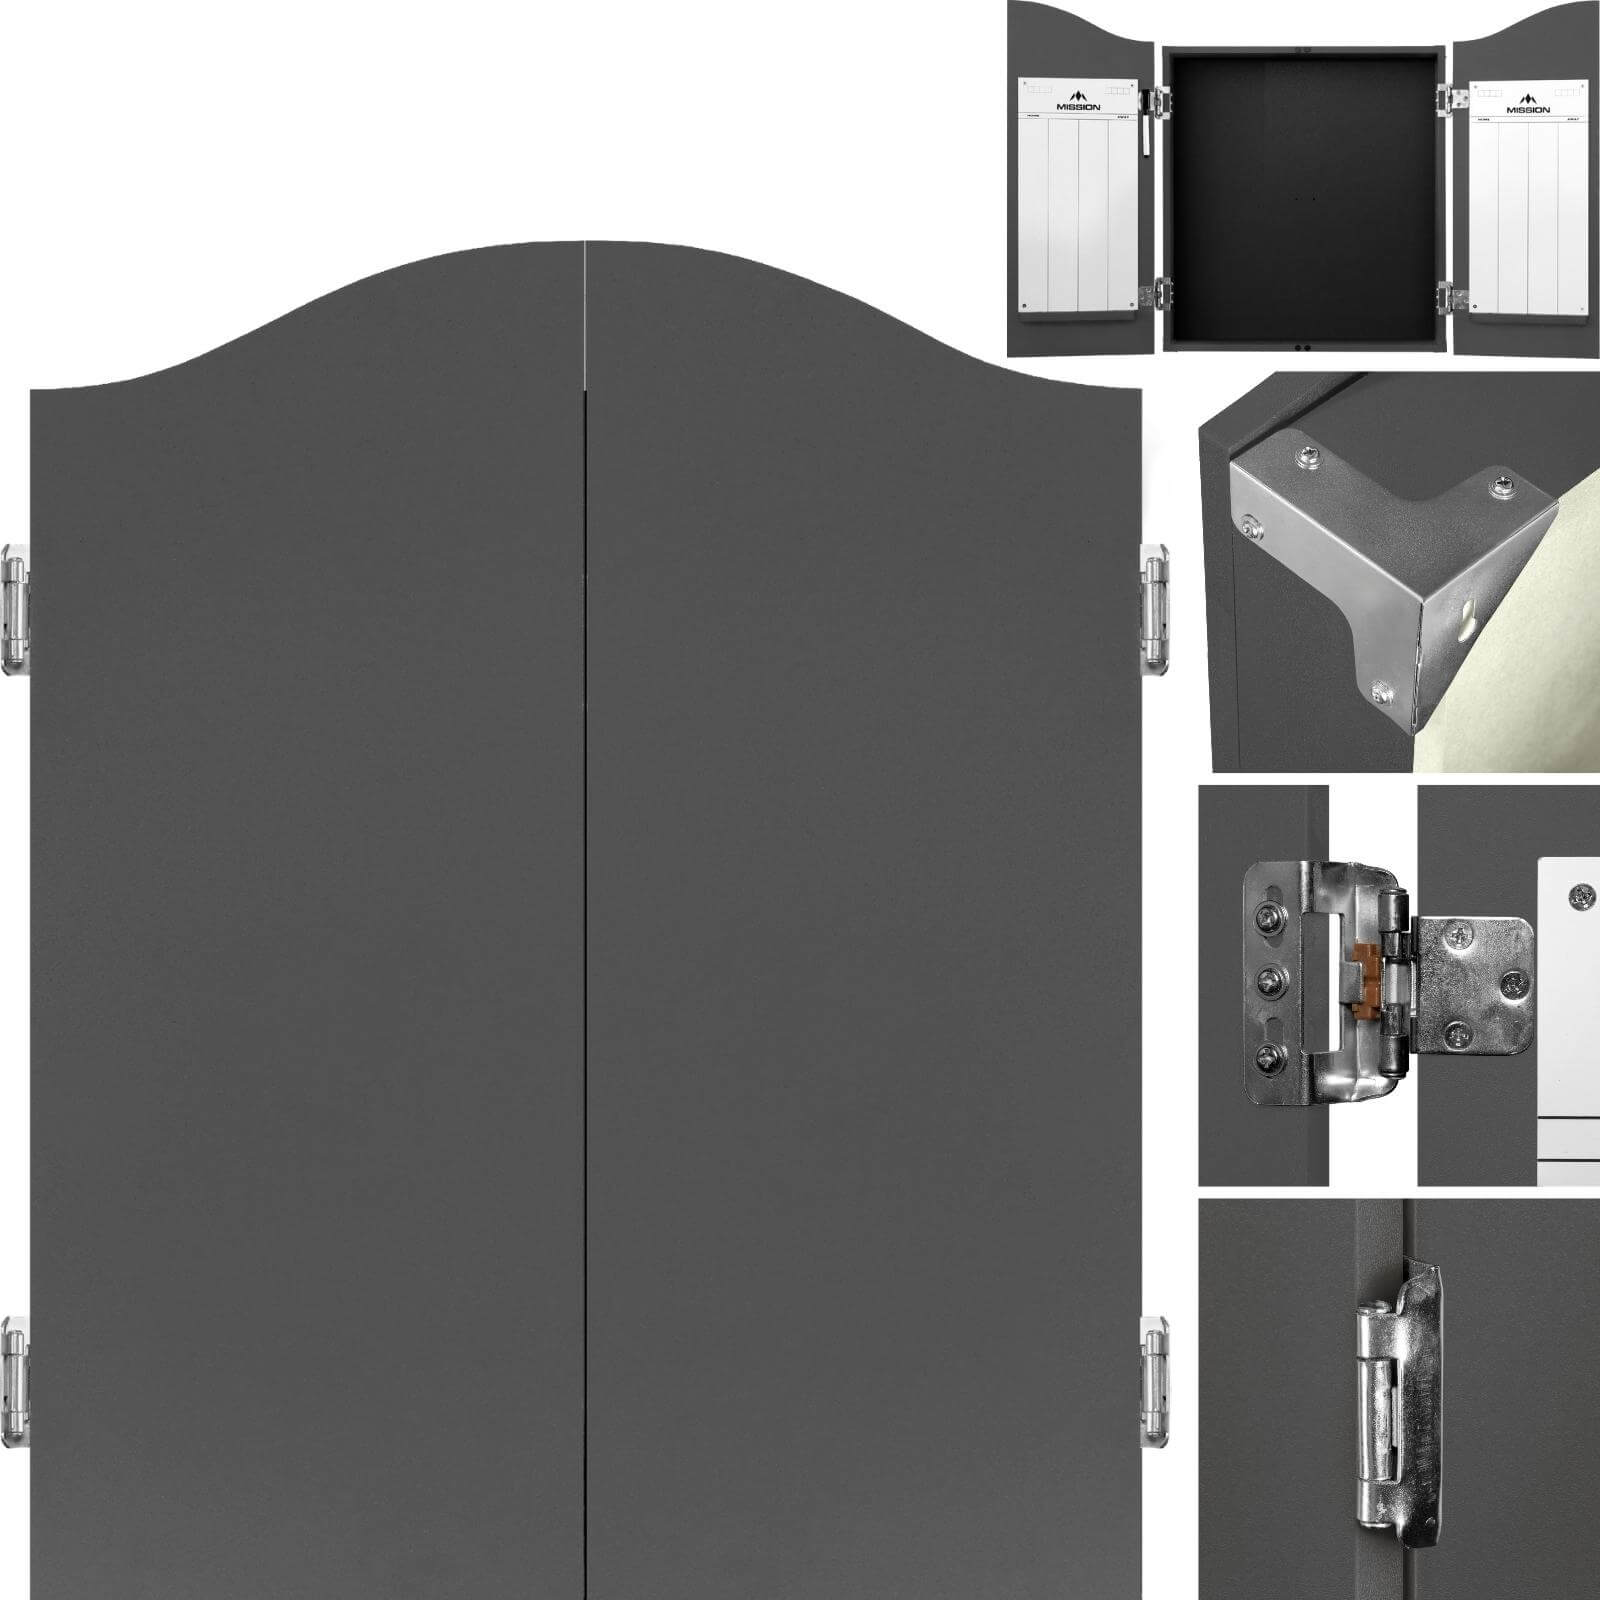 Dartboard Accessories - Mission - Dartboard Cabinet - Deluxe Quality - Grey 